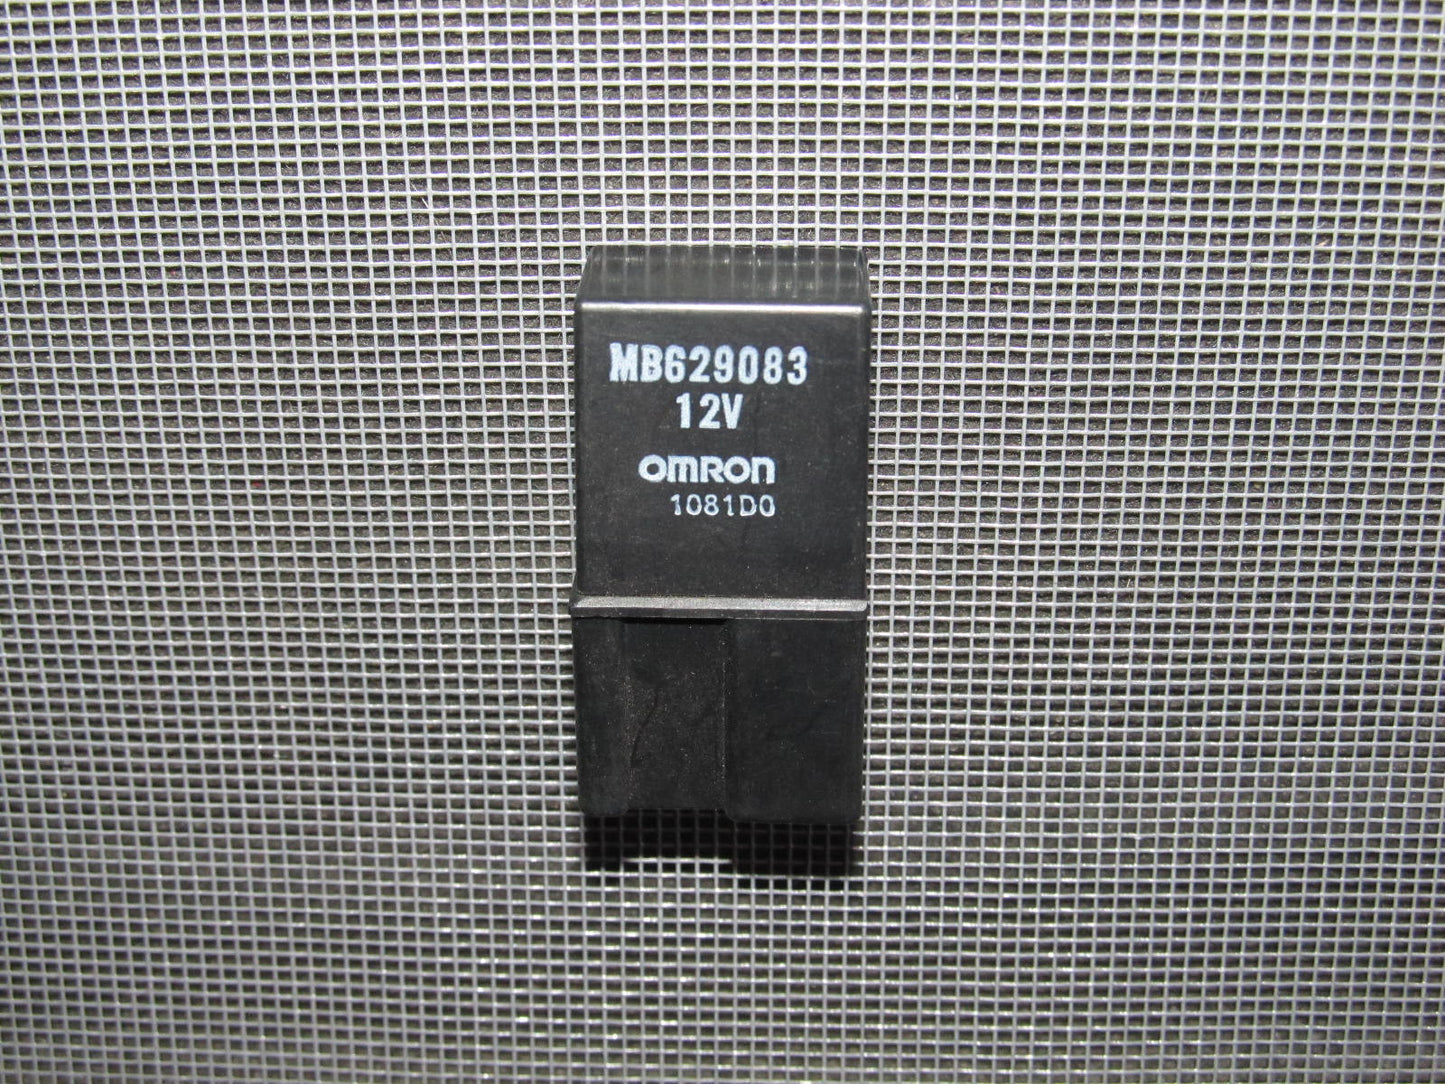 Mitsubishi Universal Relay MB629083